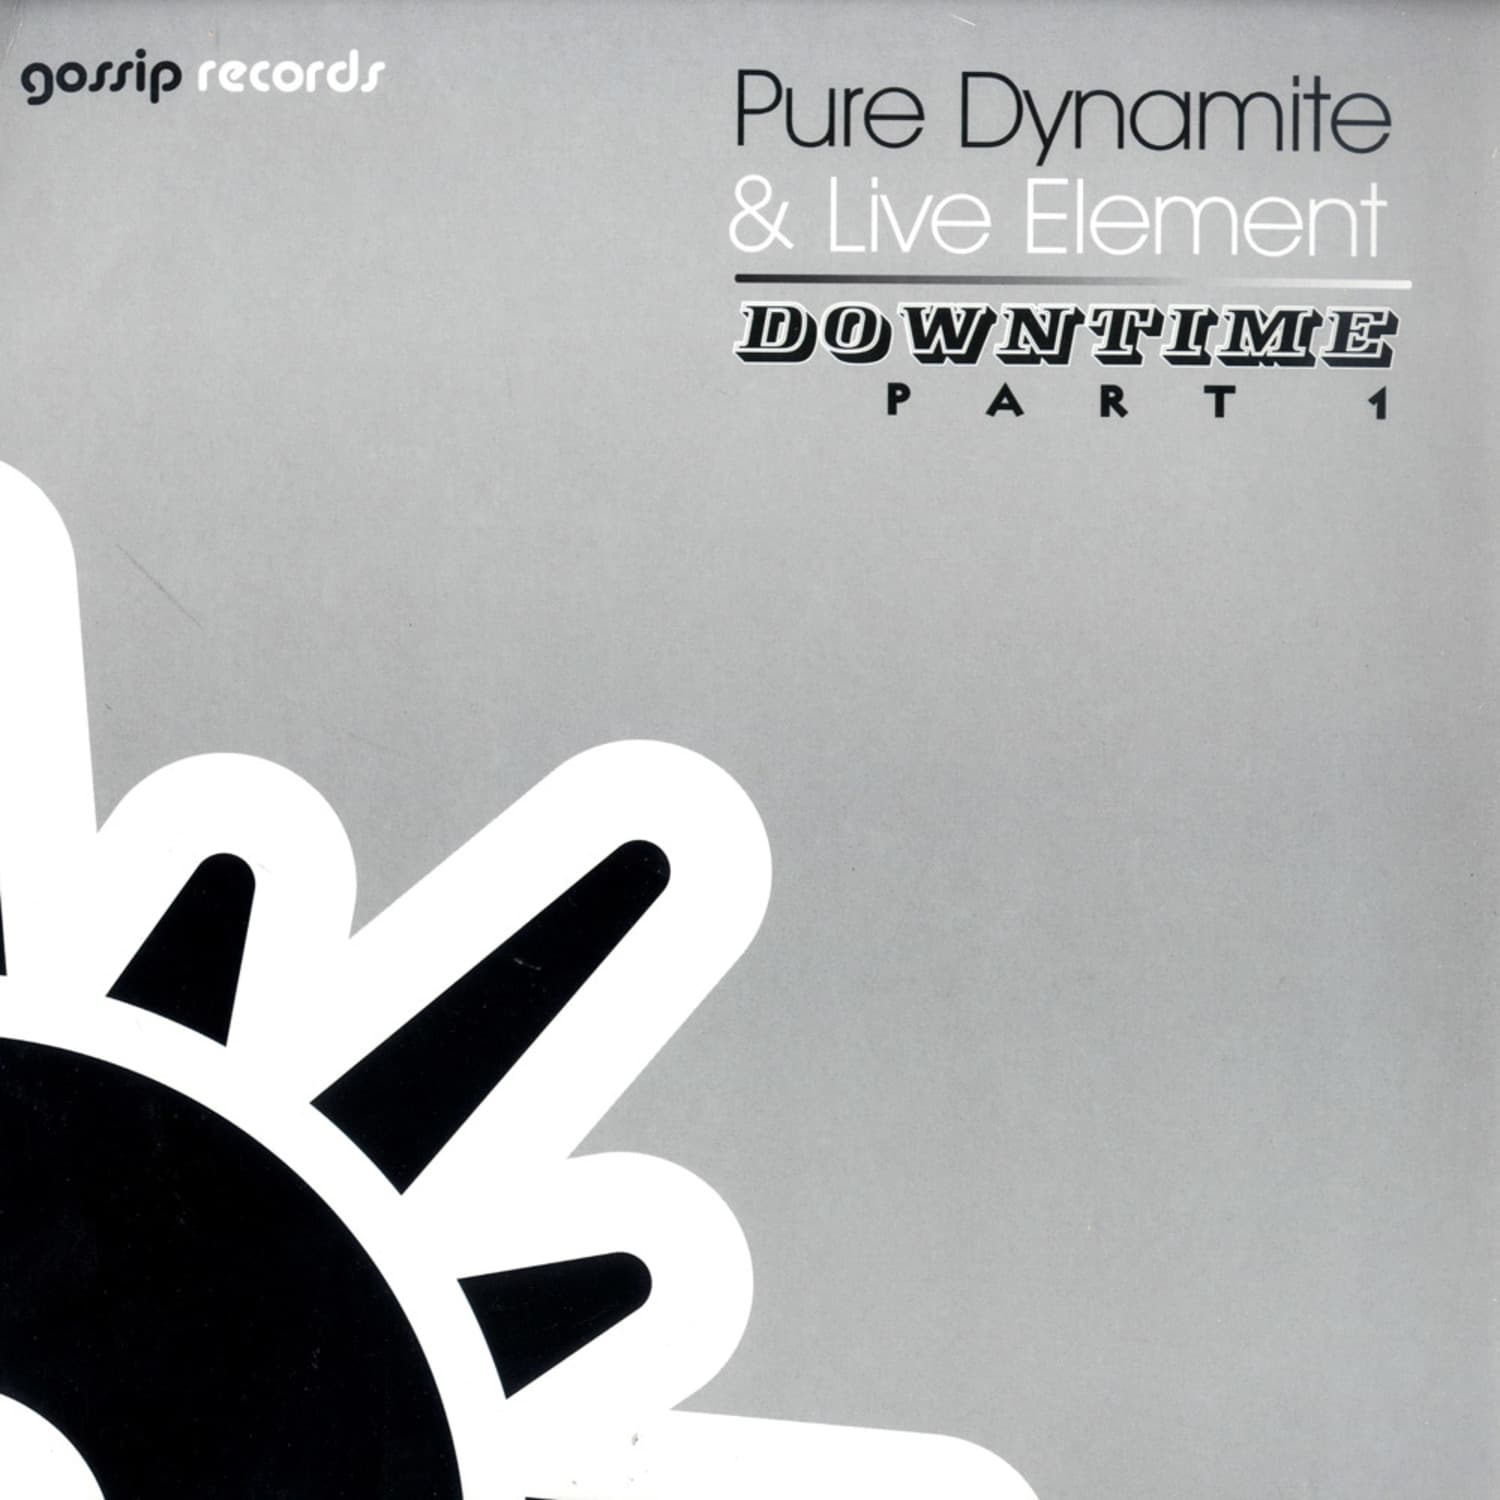 Pure Dynamite & Live Element - DOWNTIME PART 1